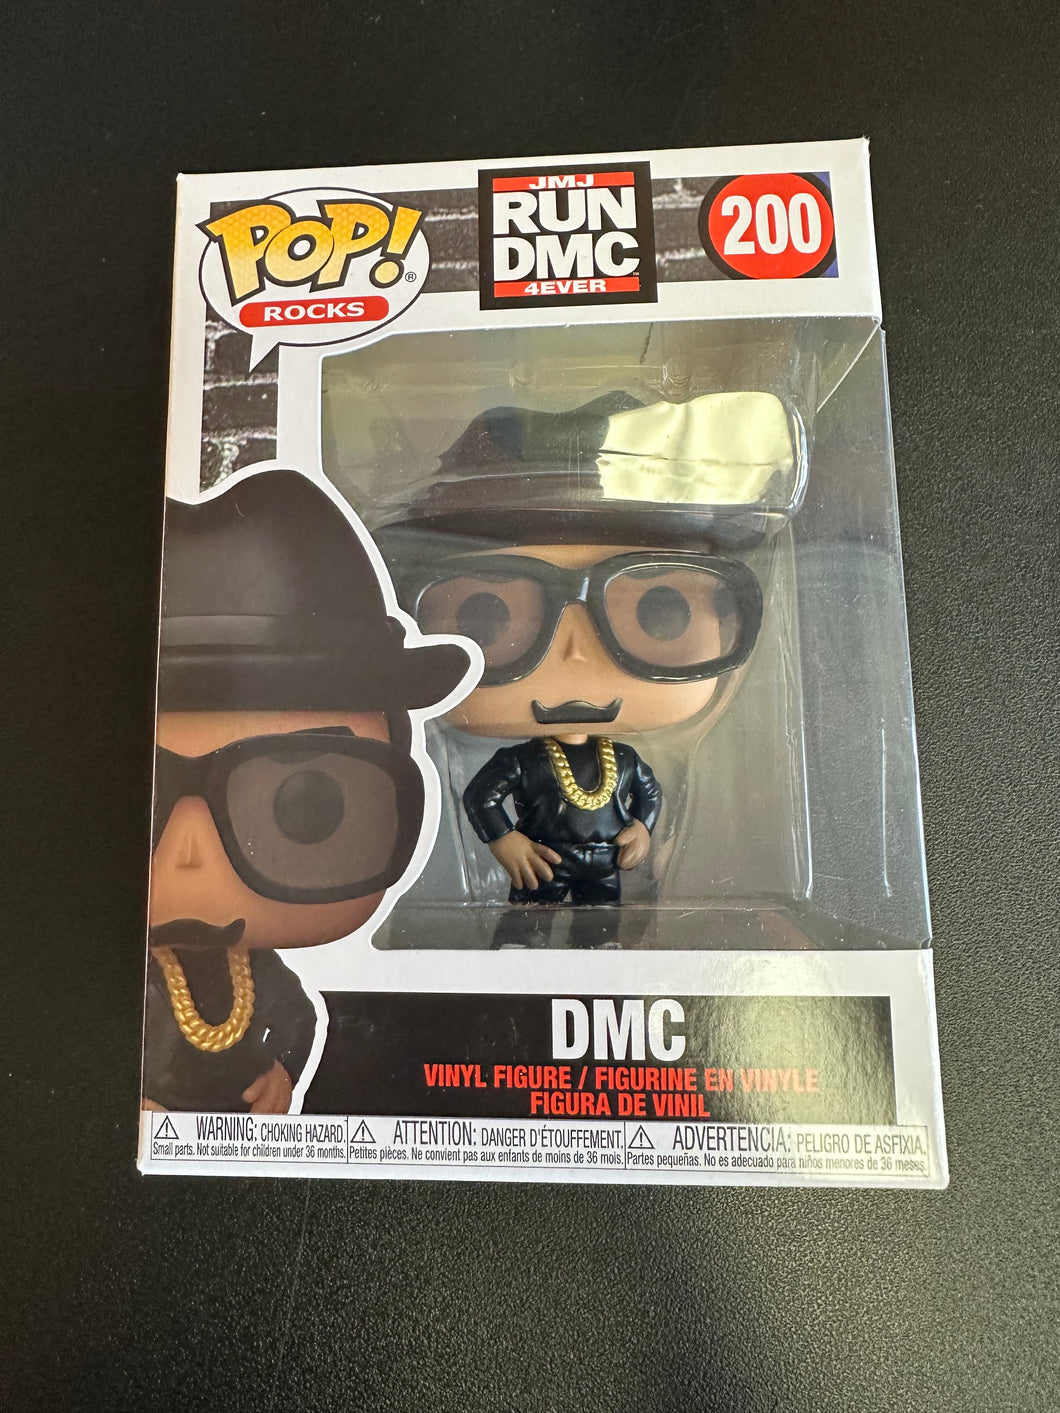 FUNKO POP ROCKS RUN DMC 200